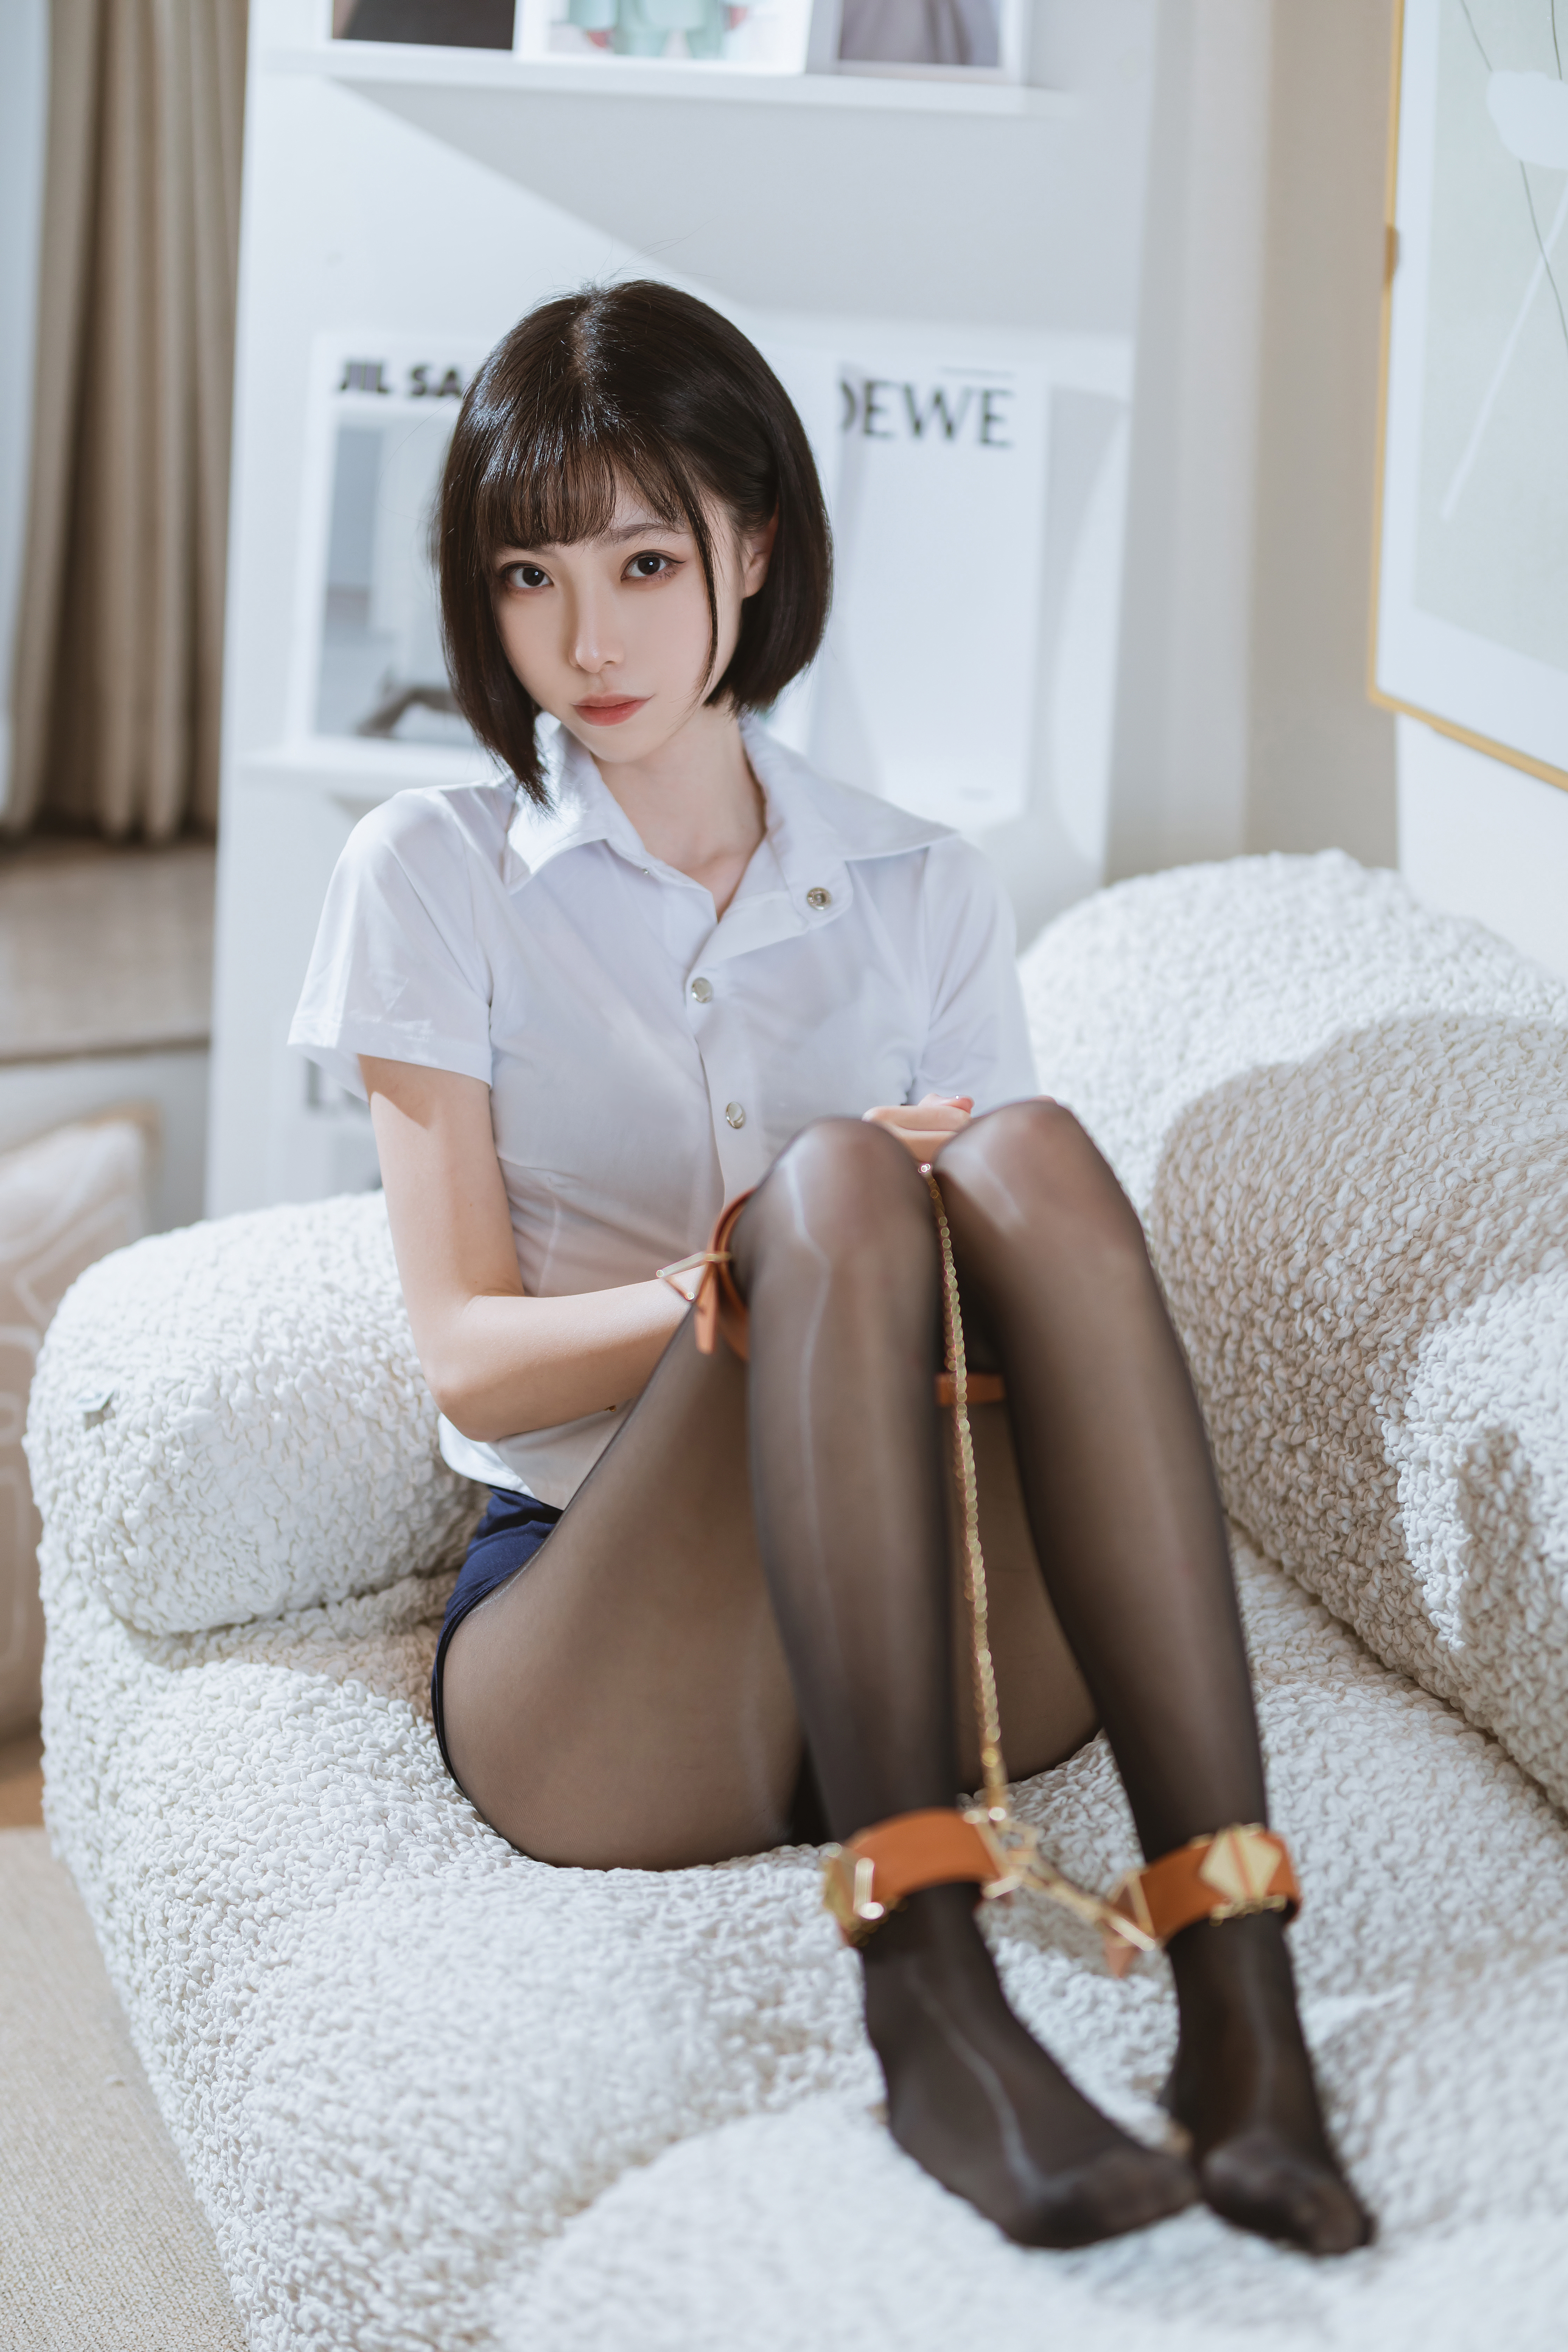 People 4480x6720 Xu Lan women model Asian cosplay stewardess stewardess outfit women indoors pantyhose chained